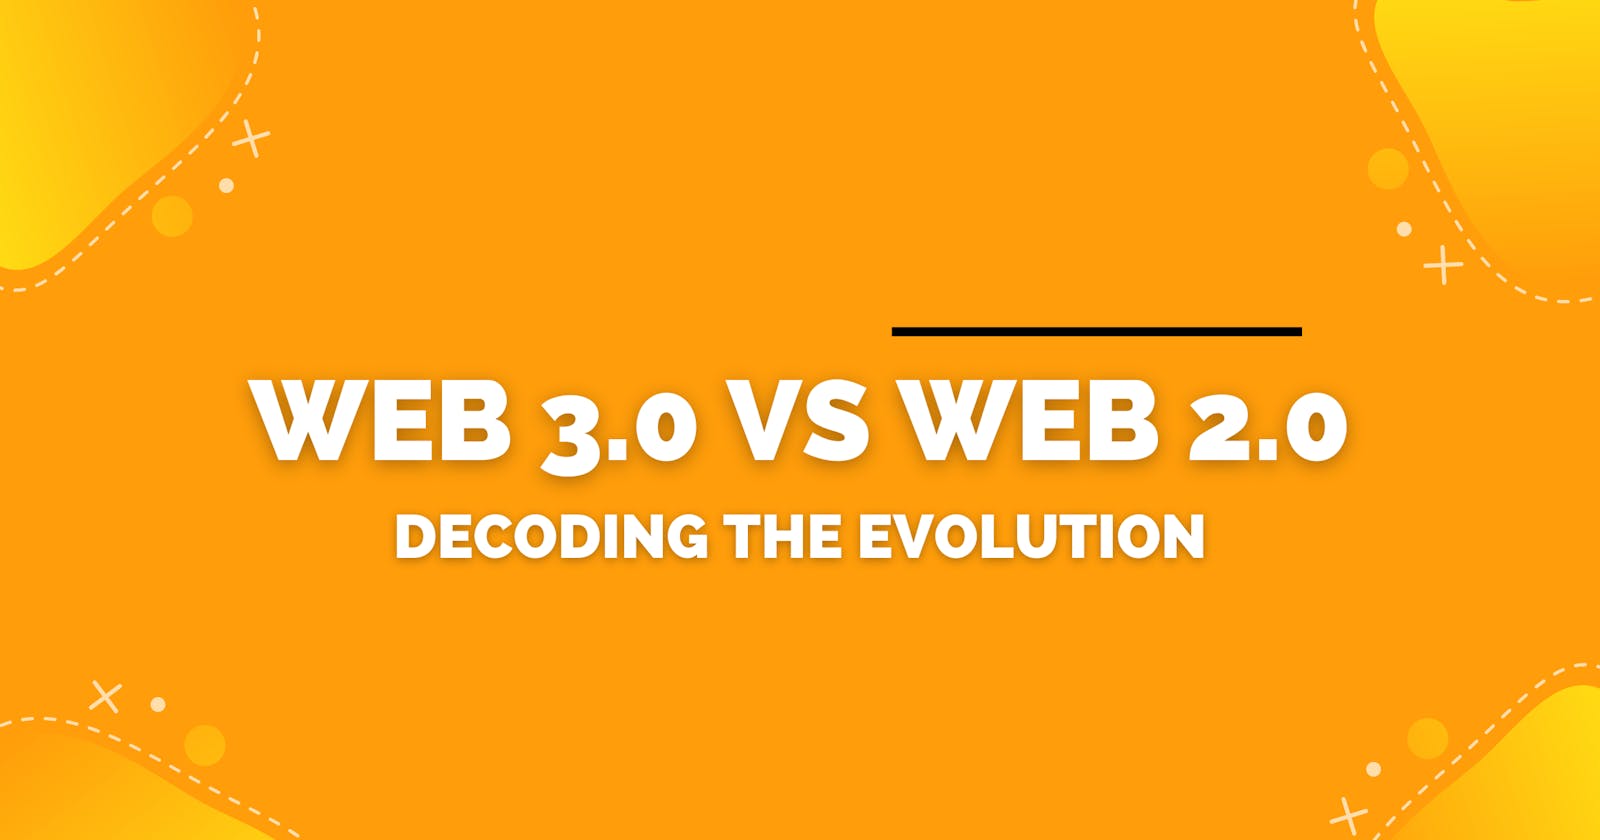 Decoding the Evolution: Web 3.0 vs Web 2.0